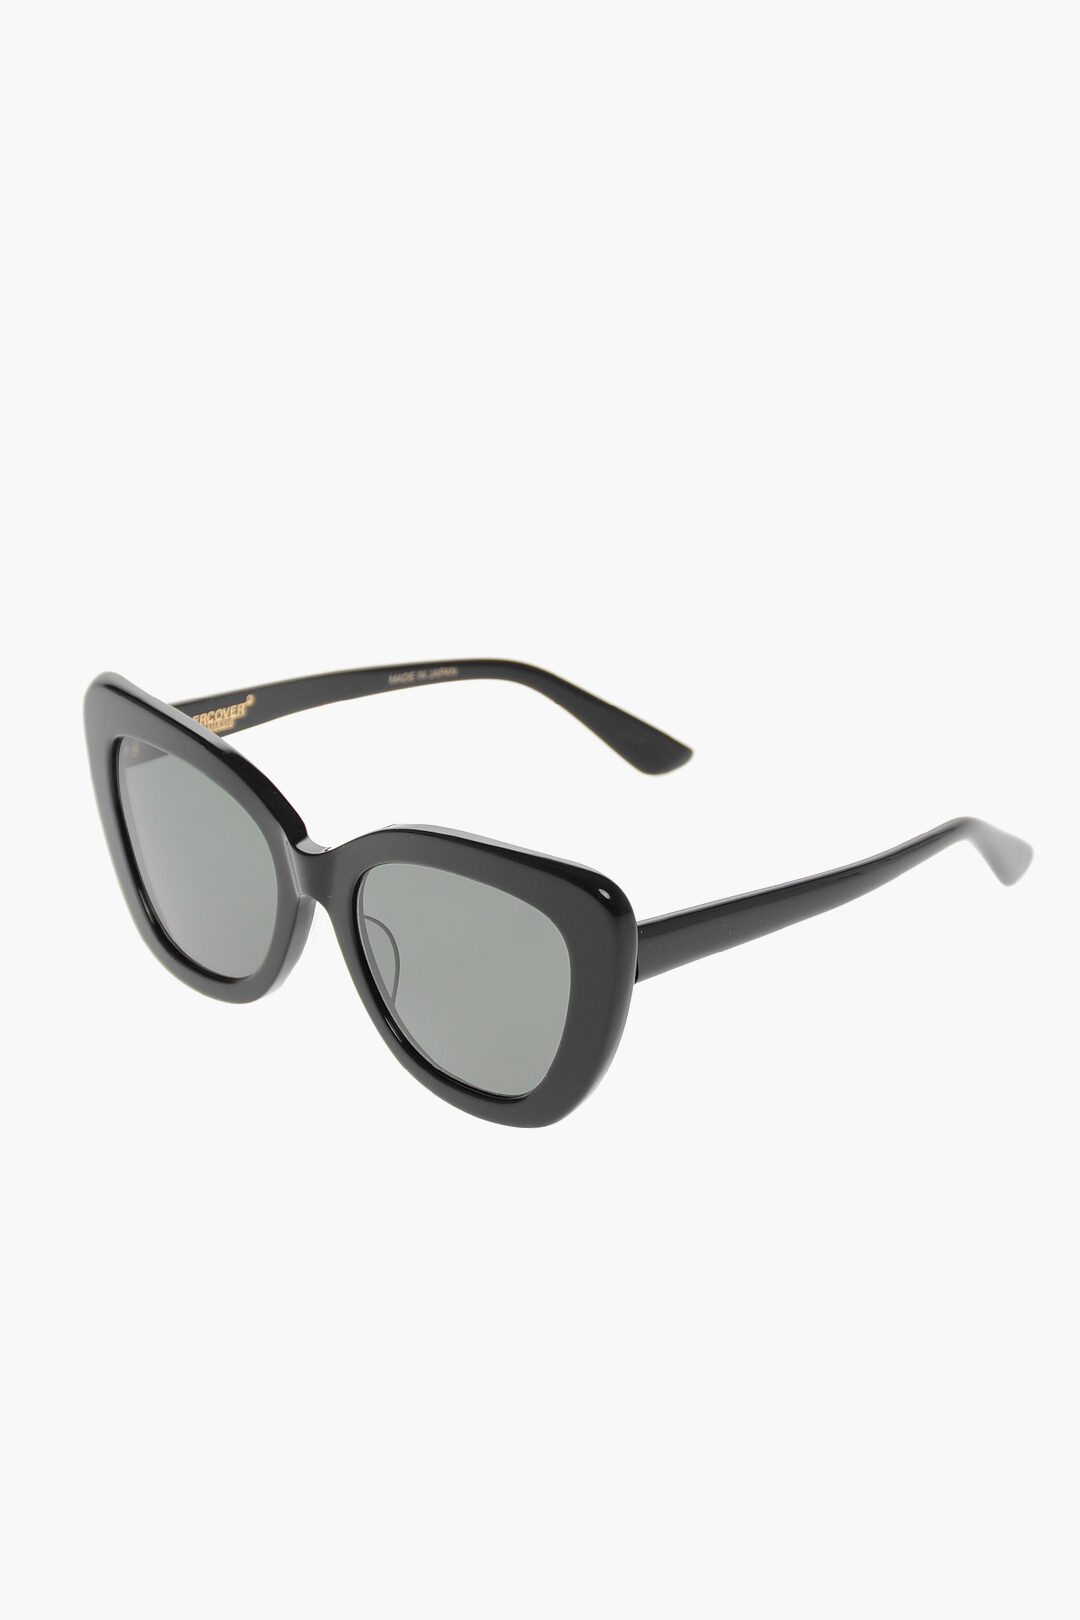 UNDERCOVER Black Cat-Eye Sunglasses Undercover